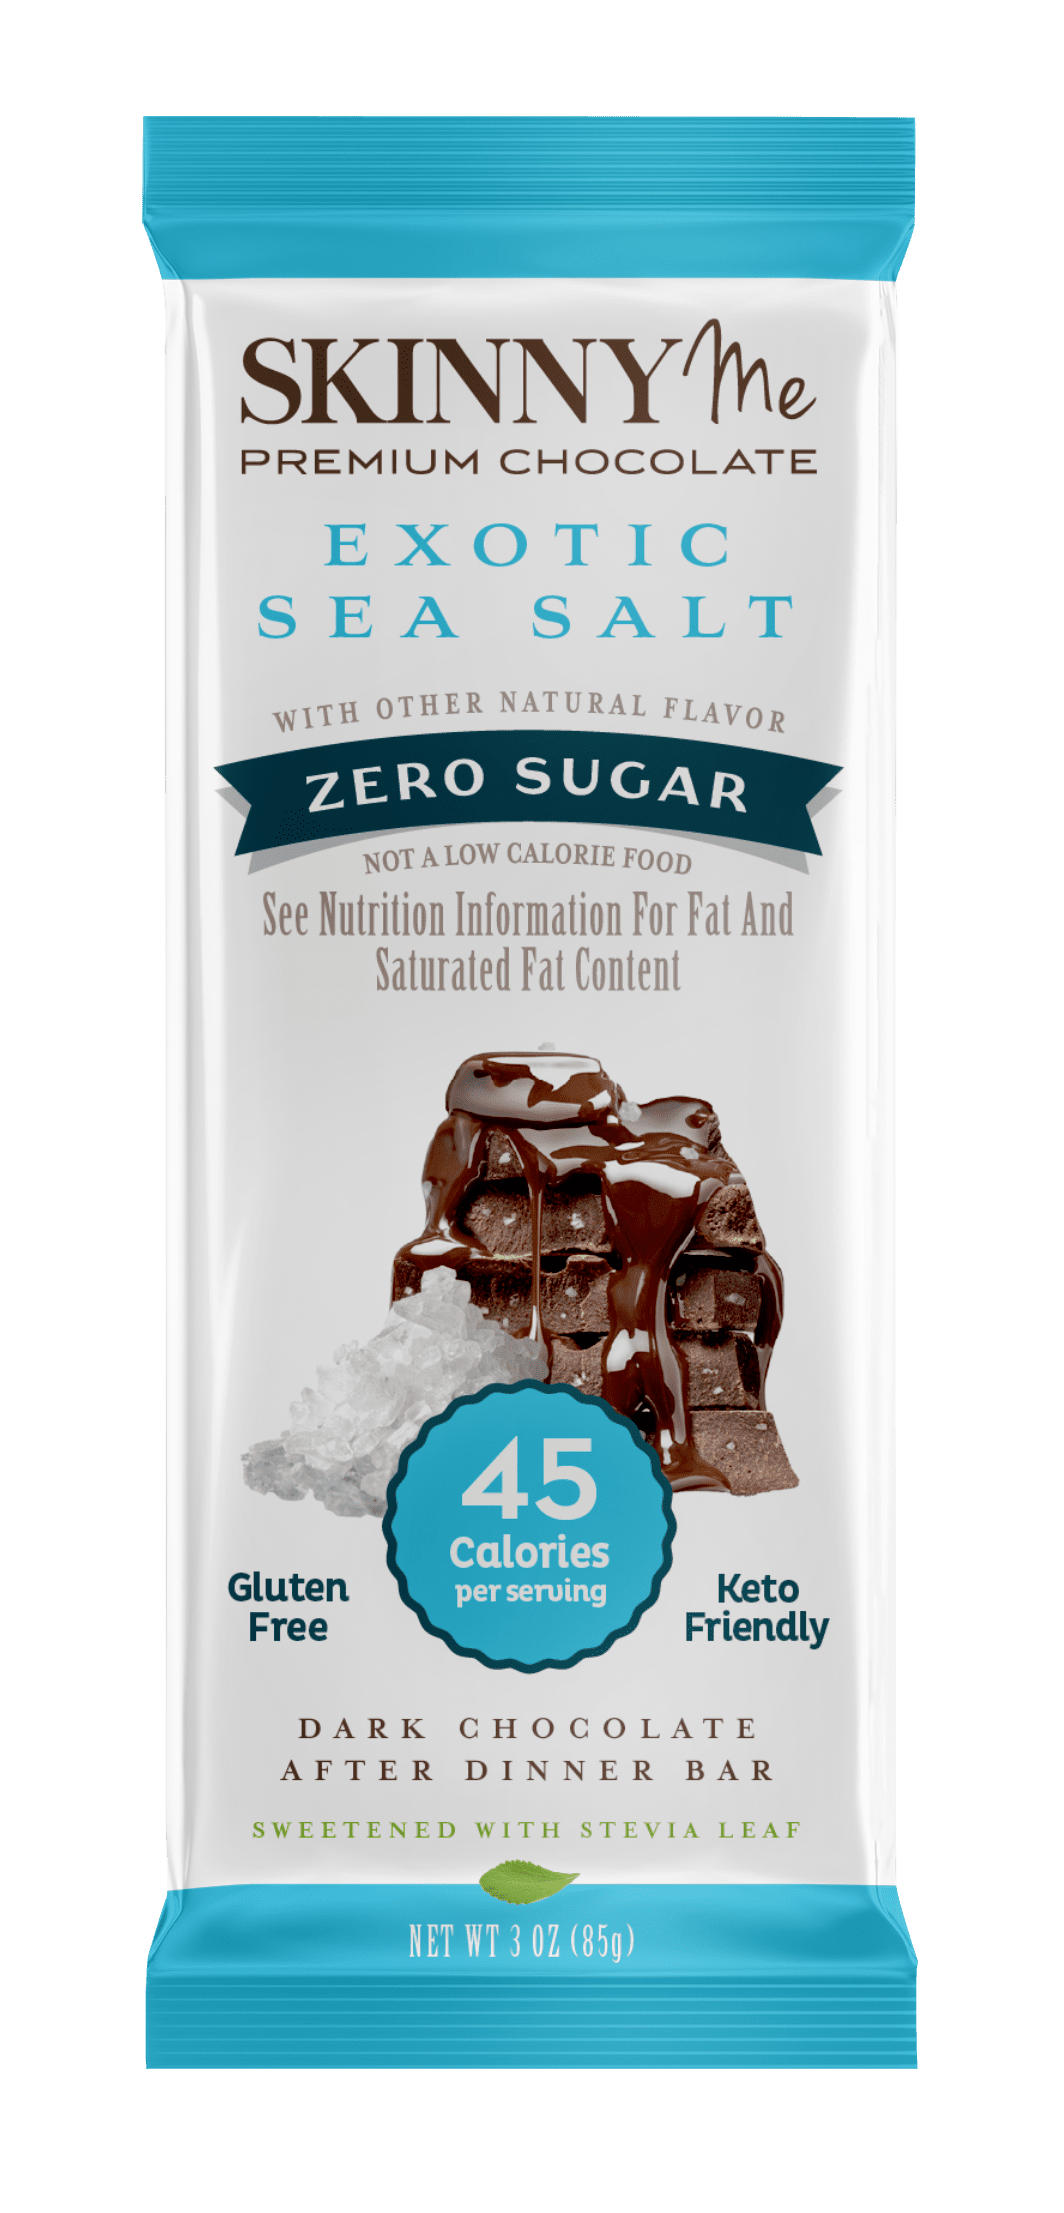 SkinnyMe Exotic Sea Salt Dark Bar 4 innerpacks per case